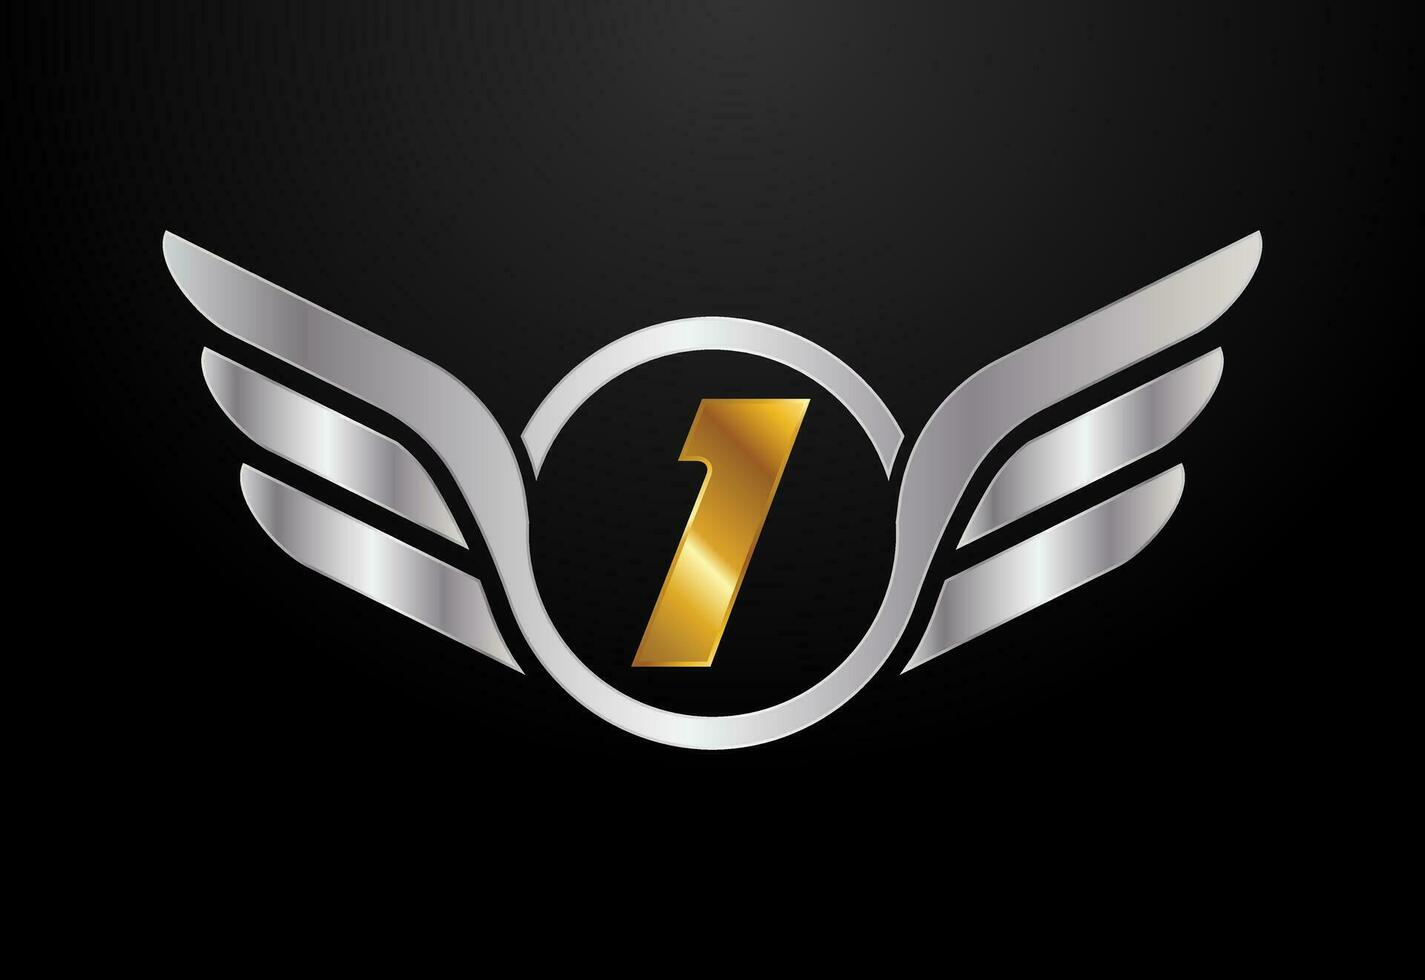 English alphabet I with wings logo design. Car and automotive vector logo concept